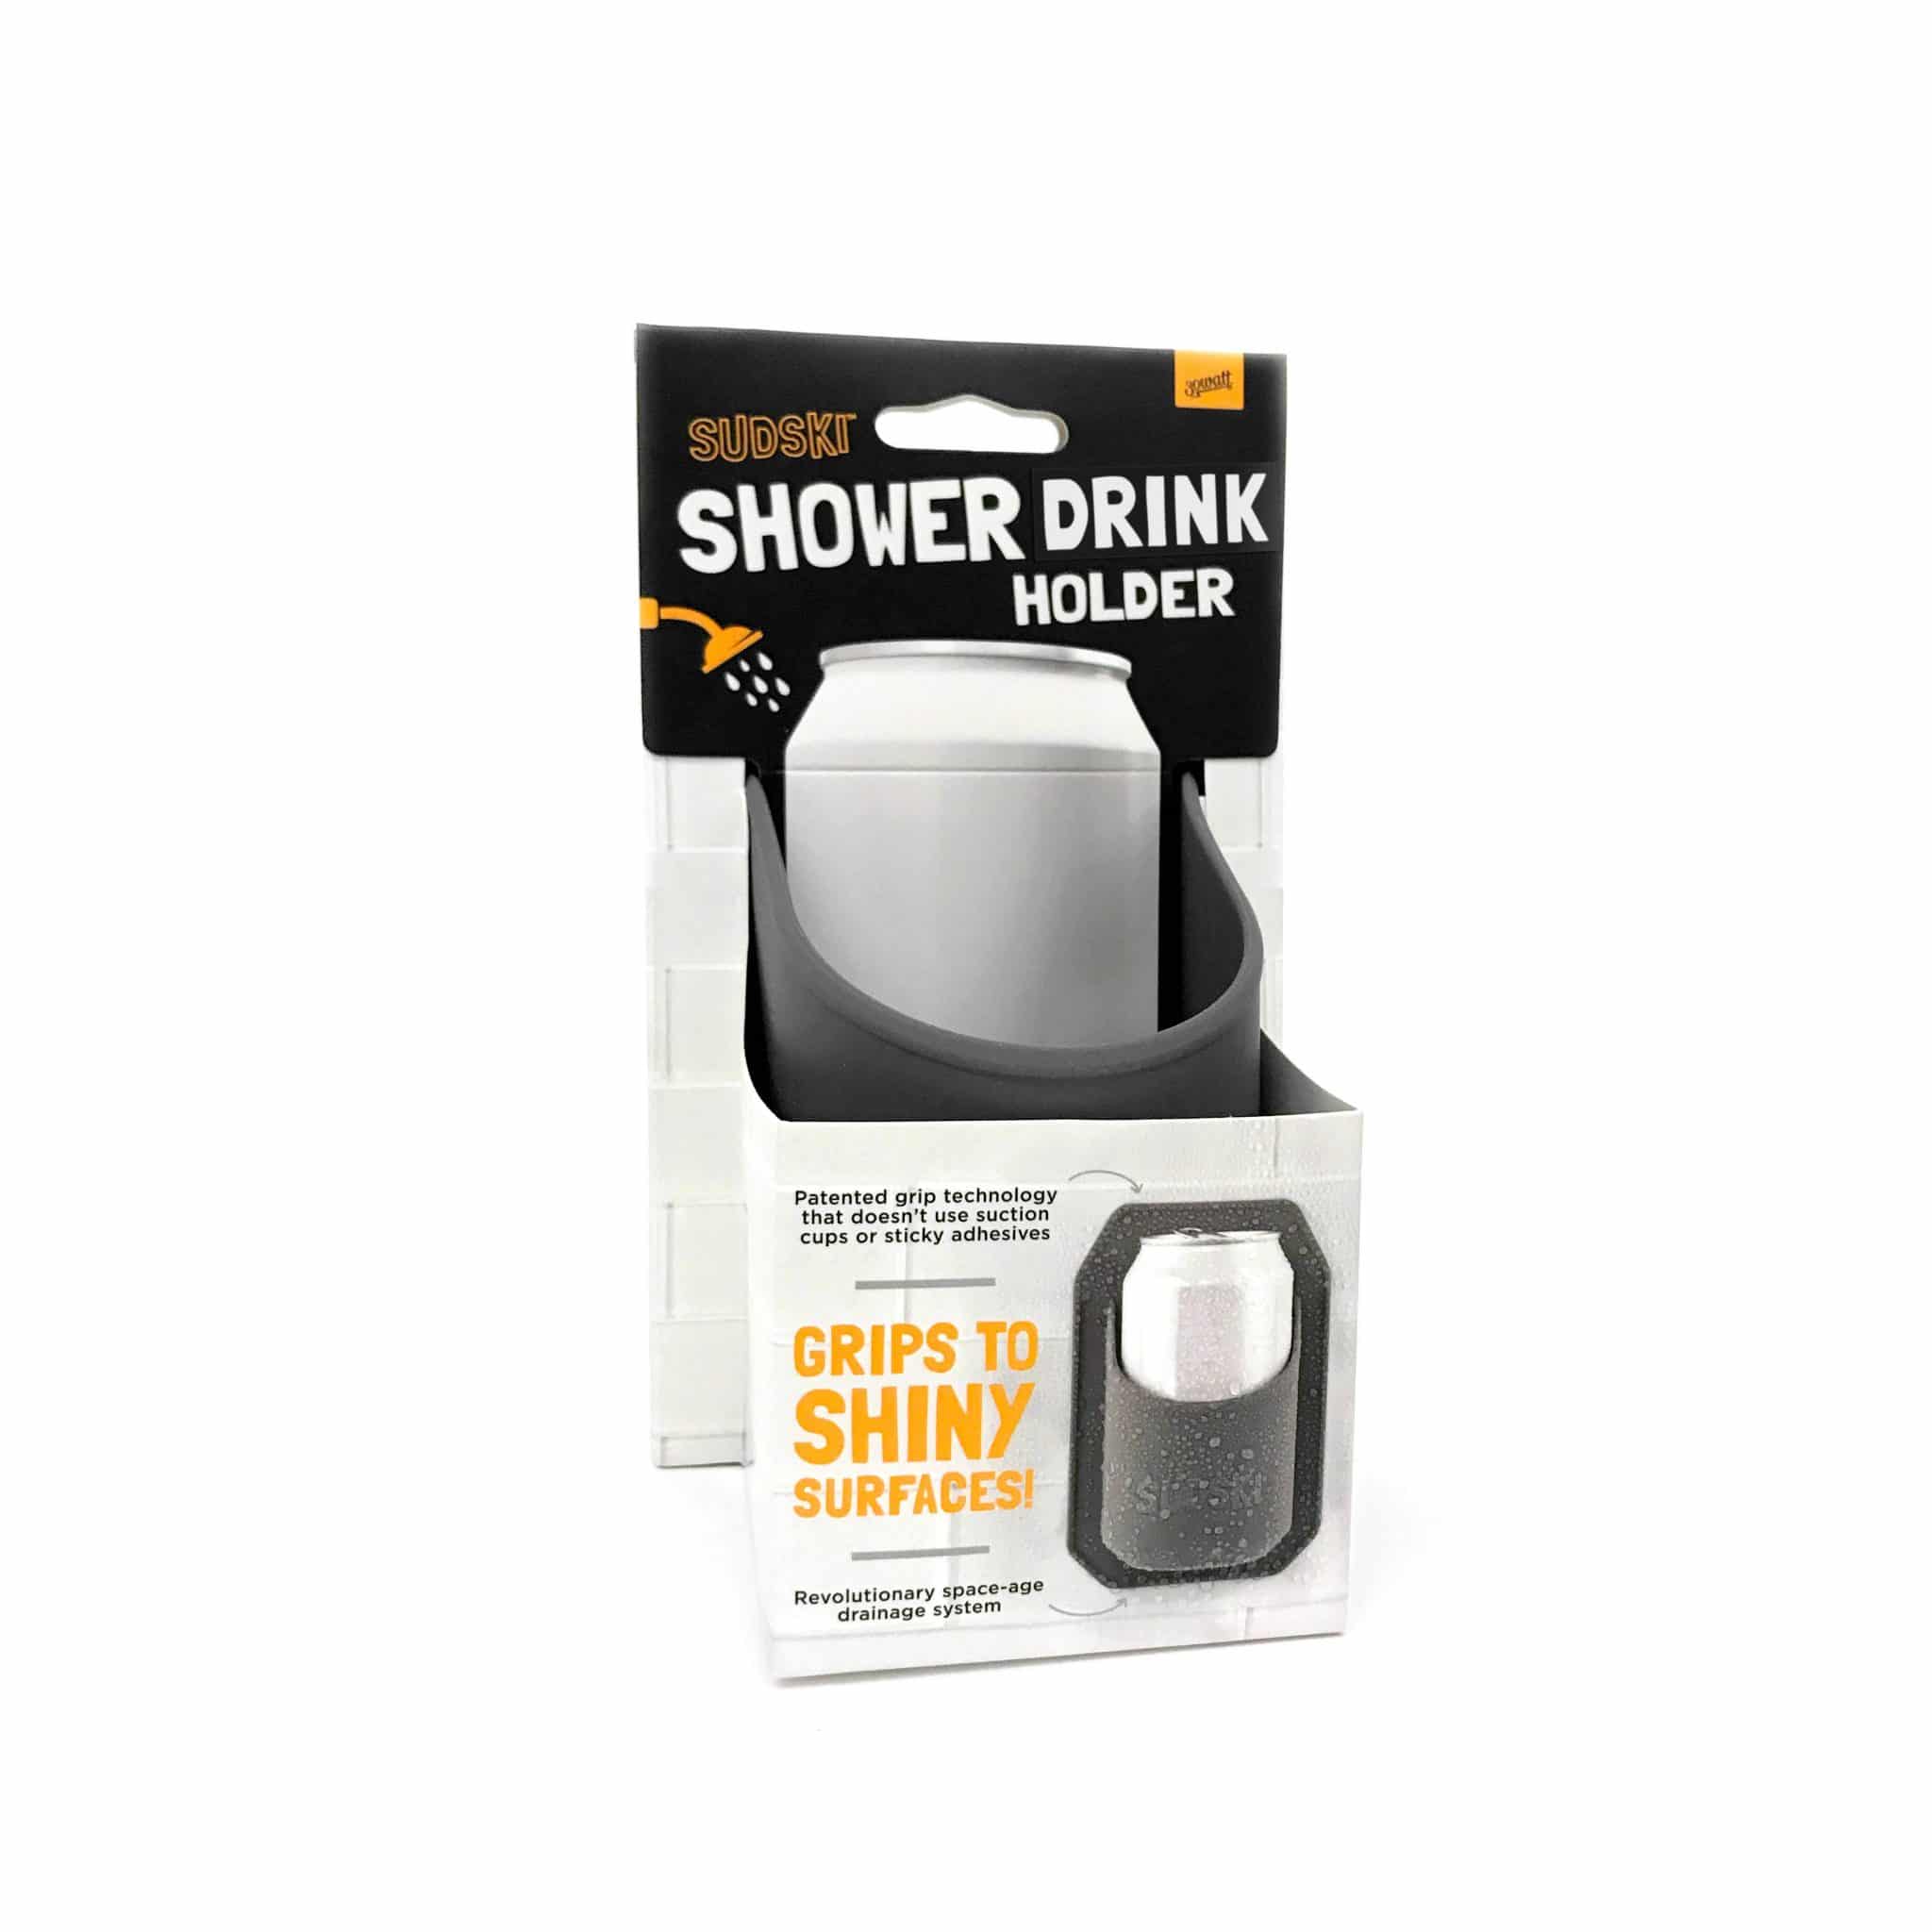 Sudski Shower Beer Holder – Spunk N Disorderly Soaps